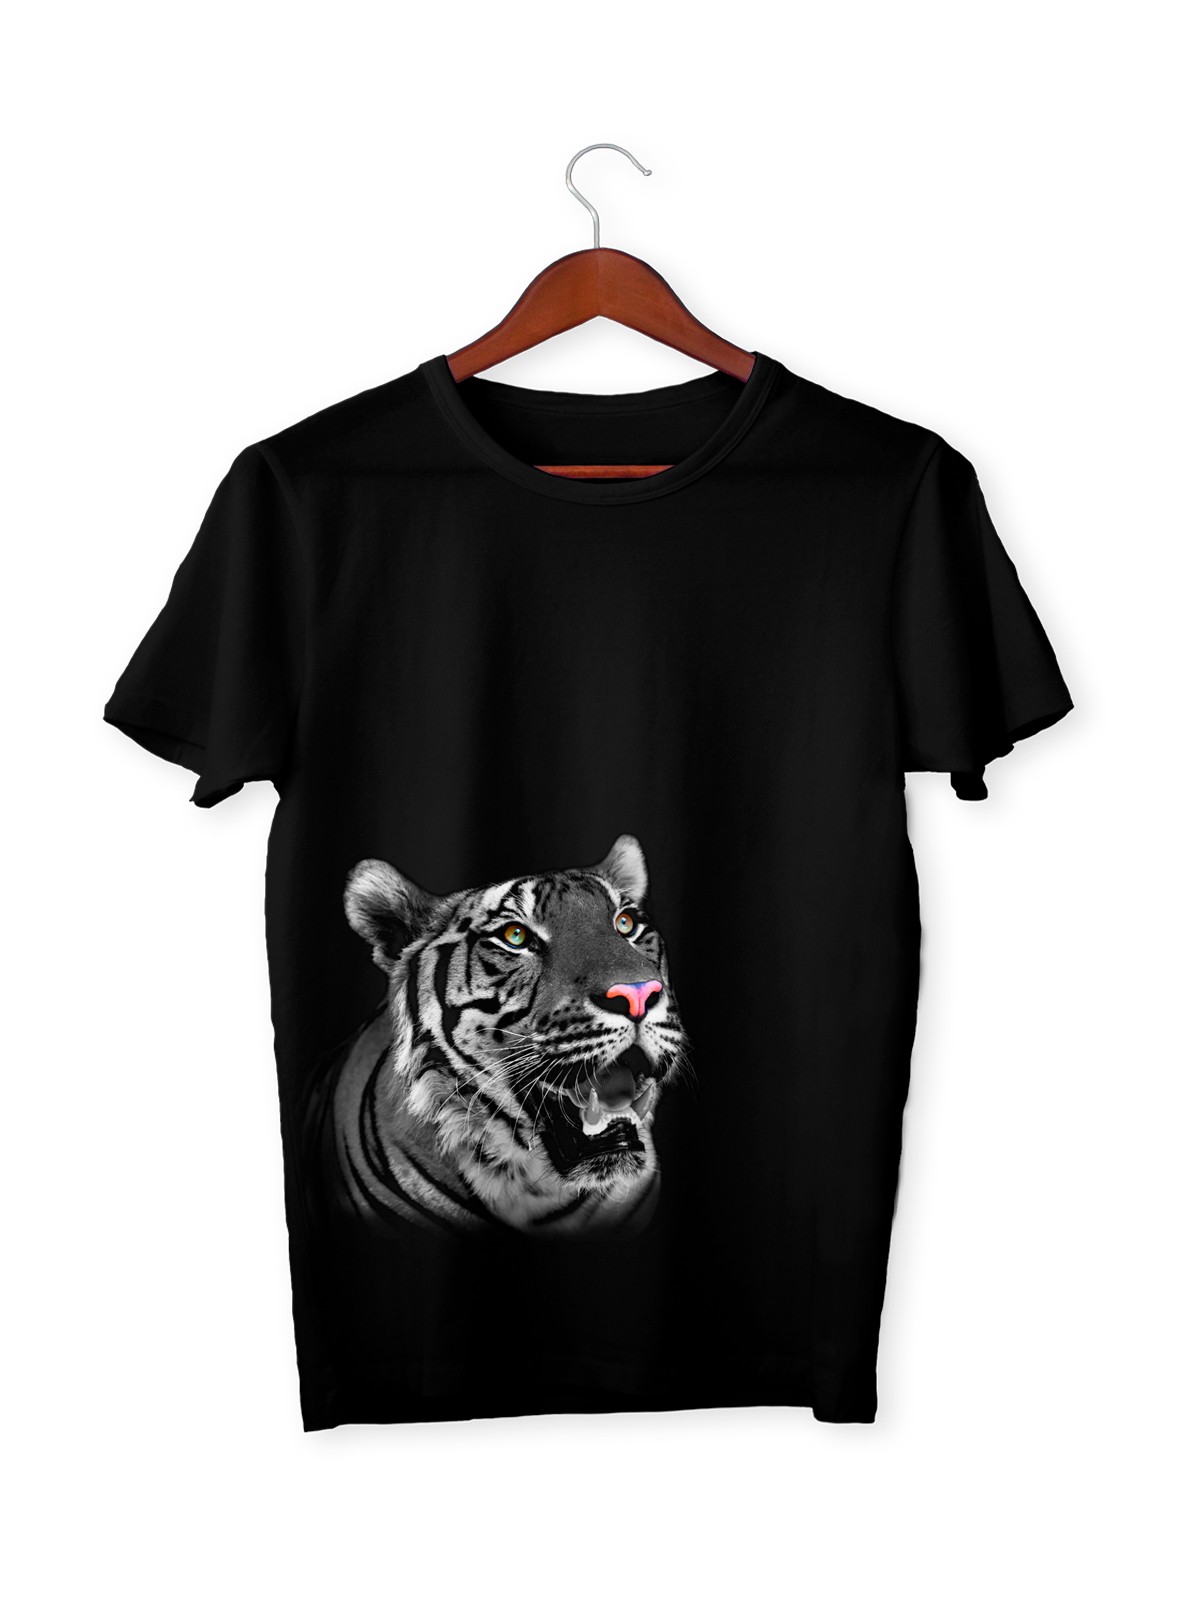 Black tiger t shirt